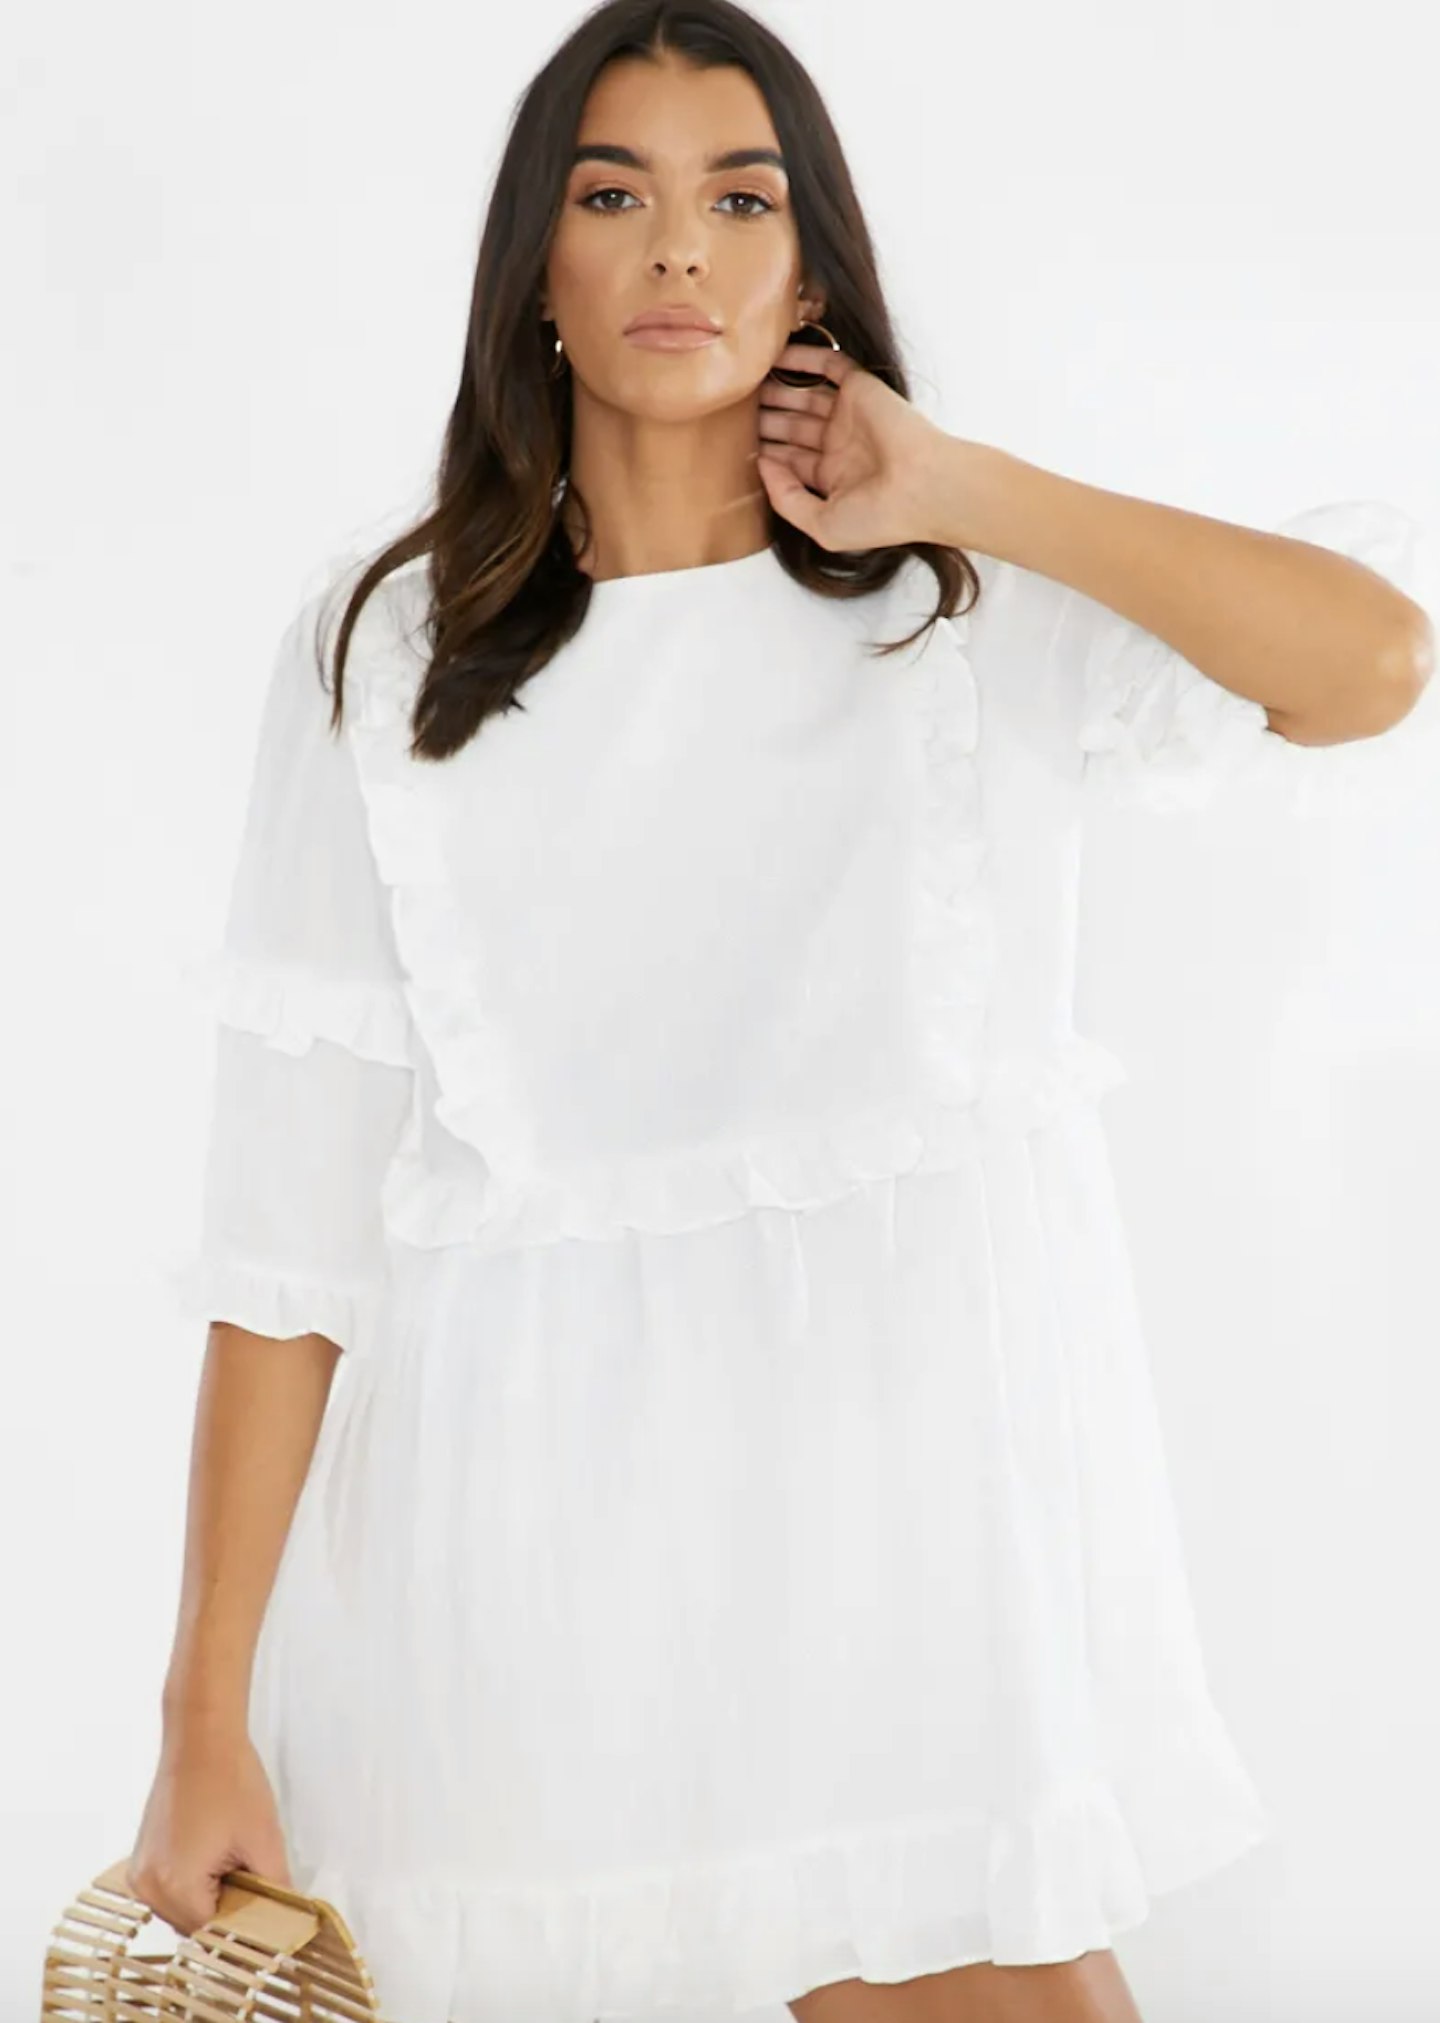 Lorna Luxe Girl's Girl Ruffle Dress in White